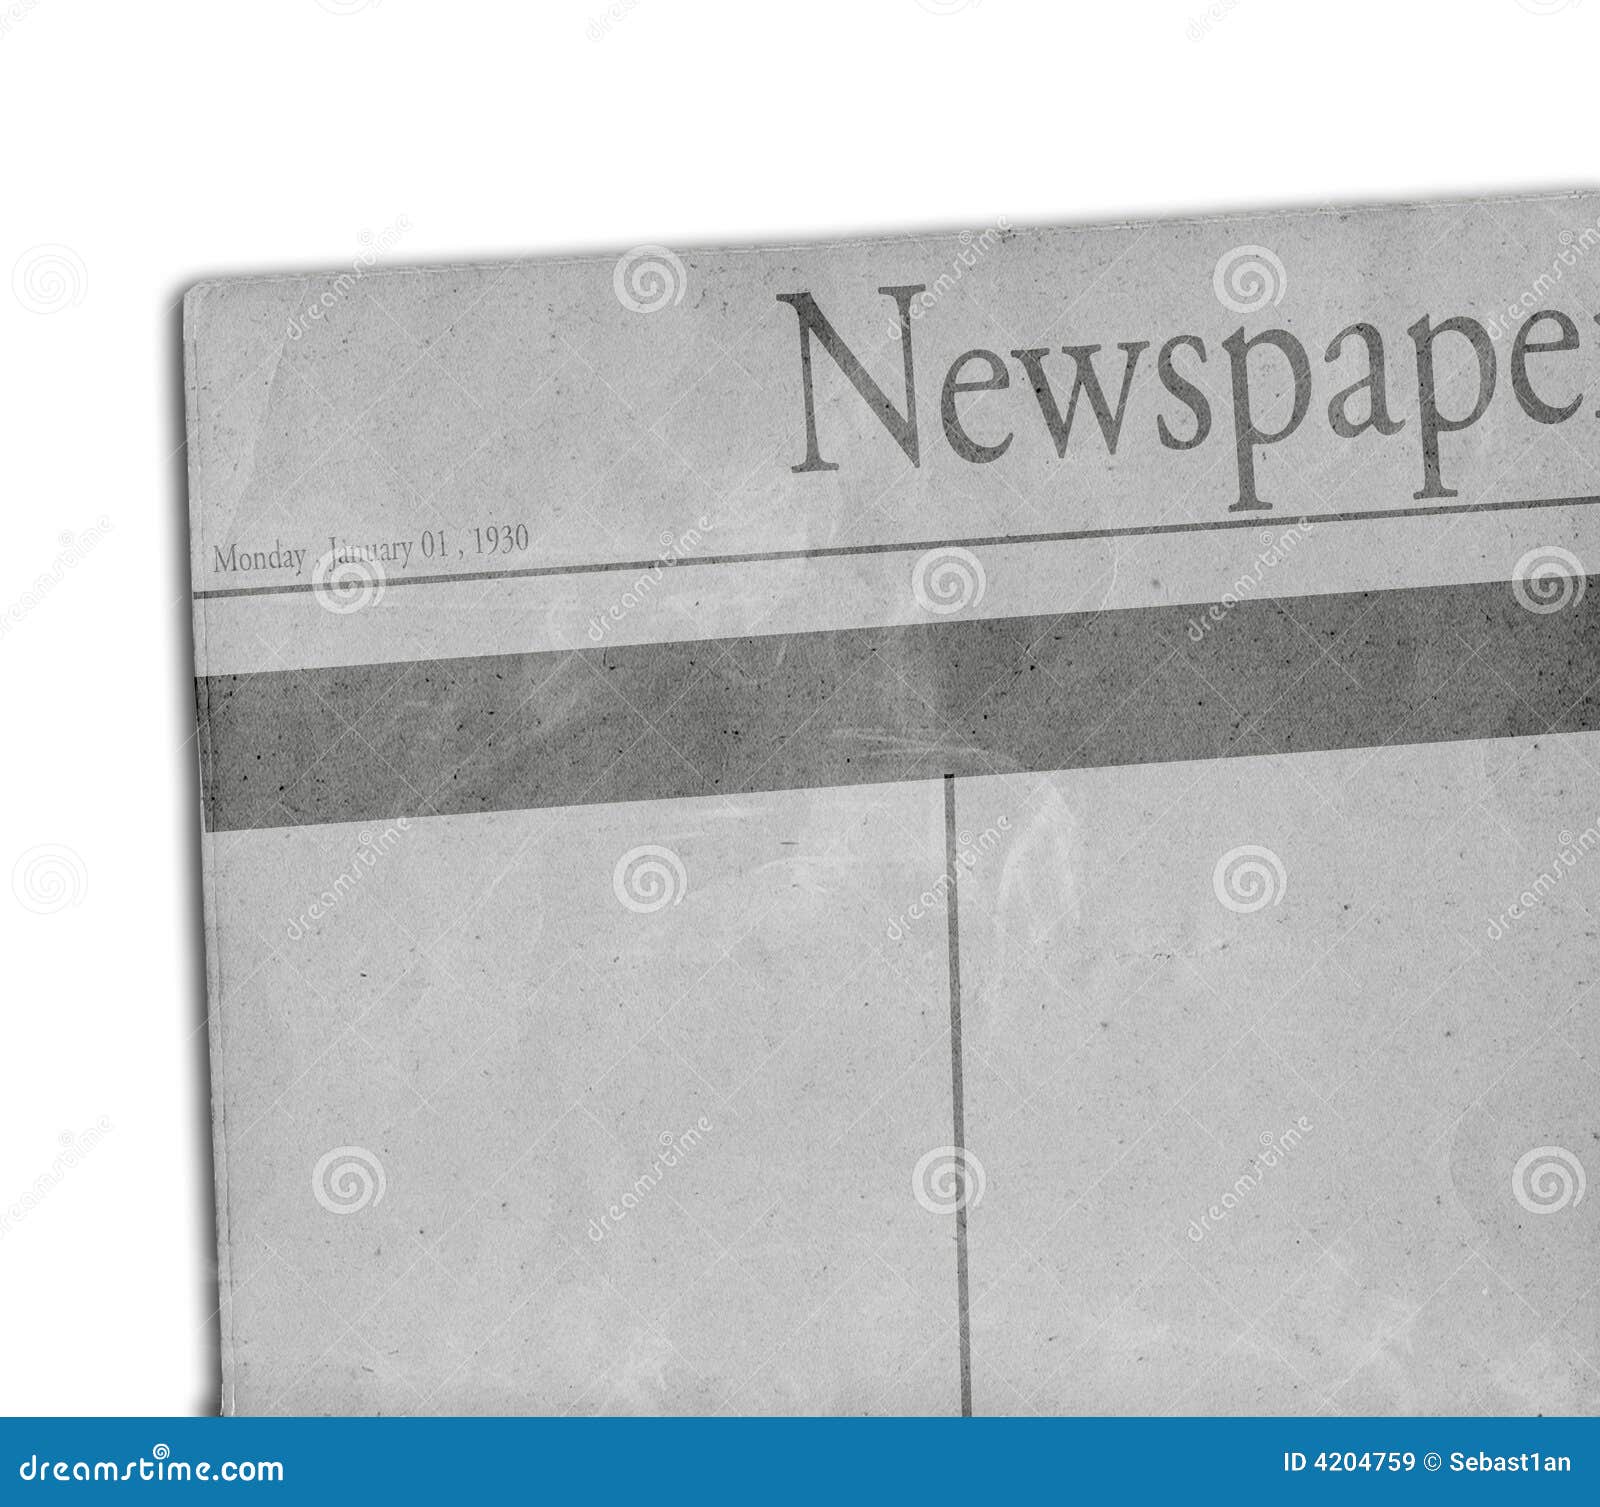 News paper stock illustration. Illustration of information - 4204759